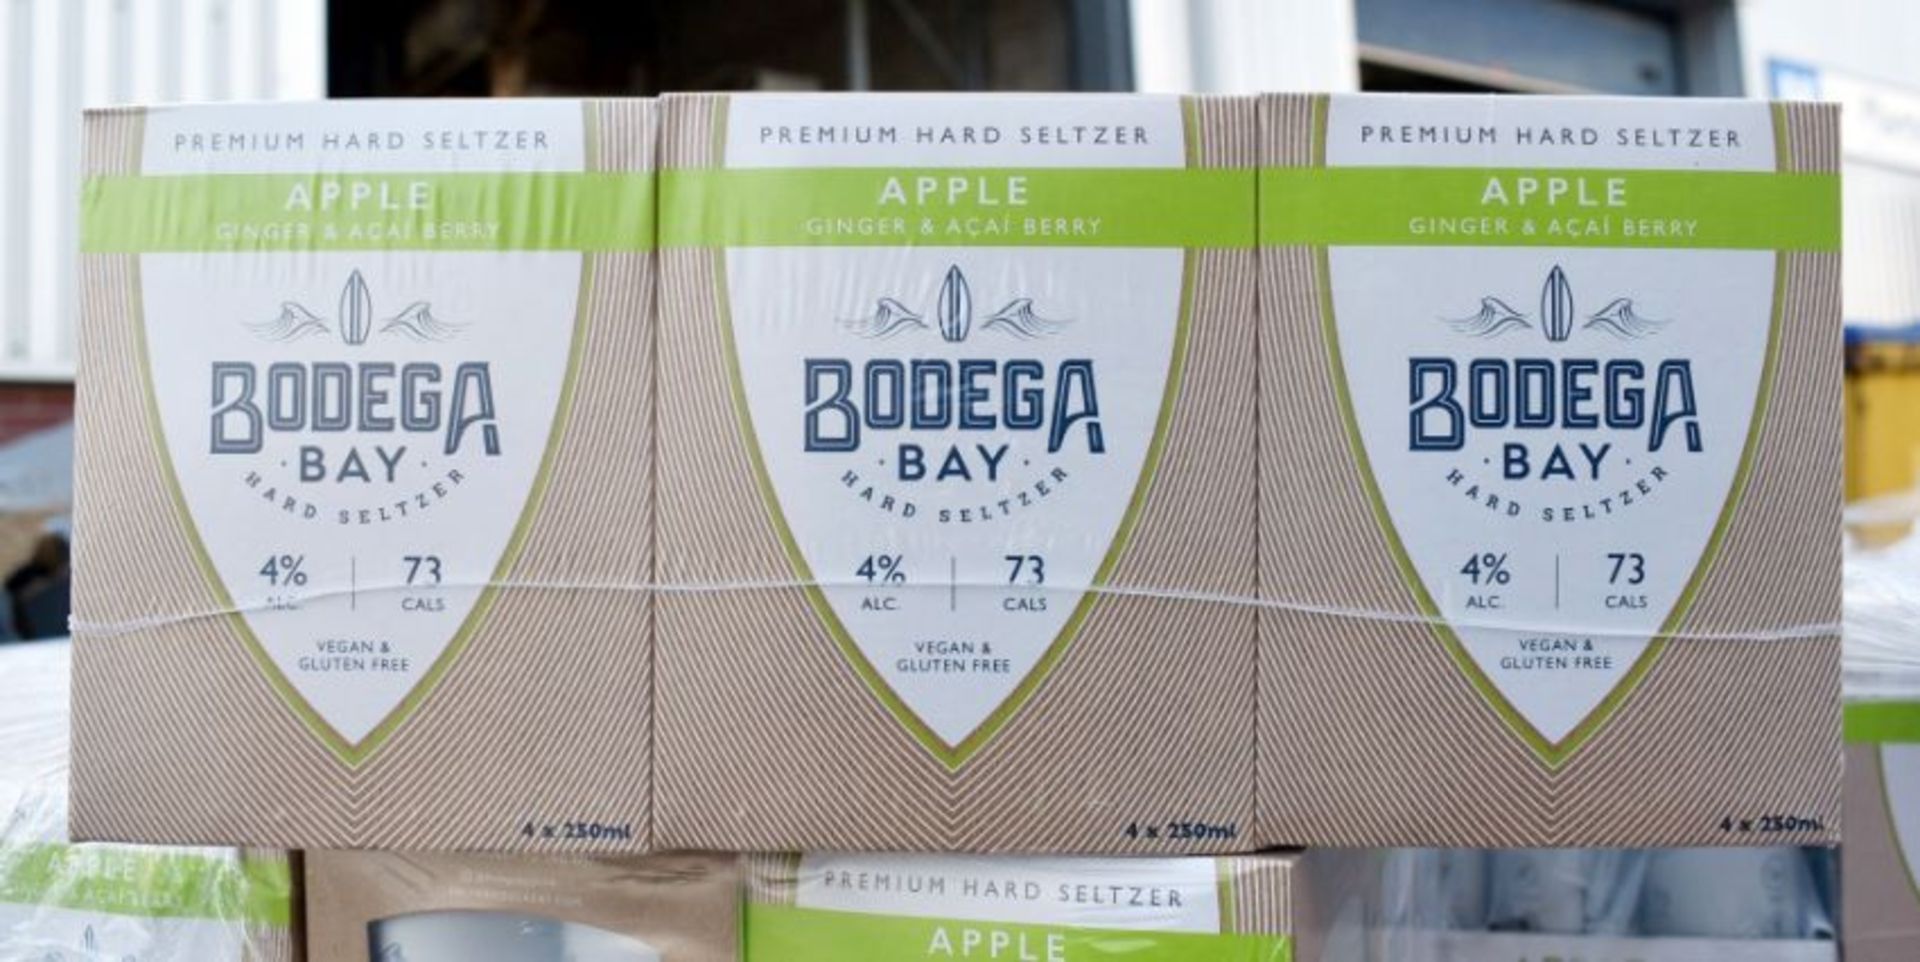 24 x Bodega Bay Hard Seltzer 250ml Alcoholic Sparkling Water Drinks - Apple Ginger & Acai Berry - Image 4 of 9